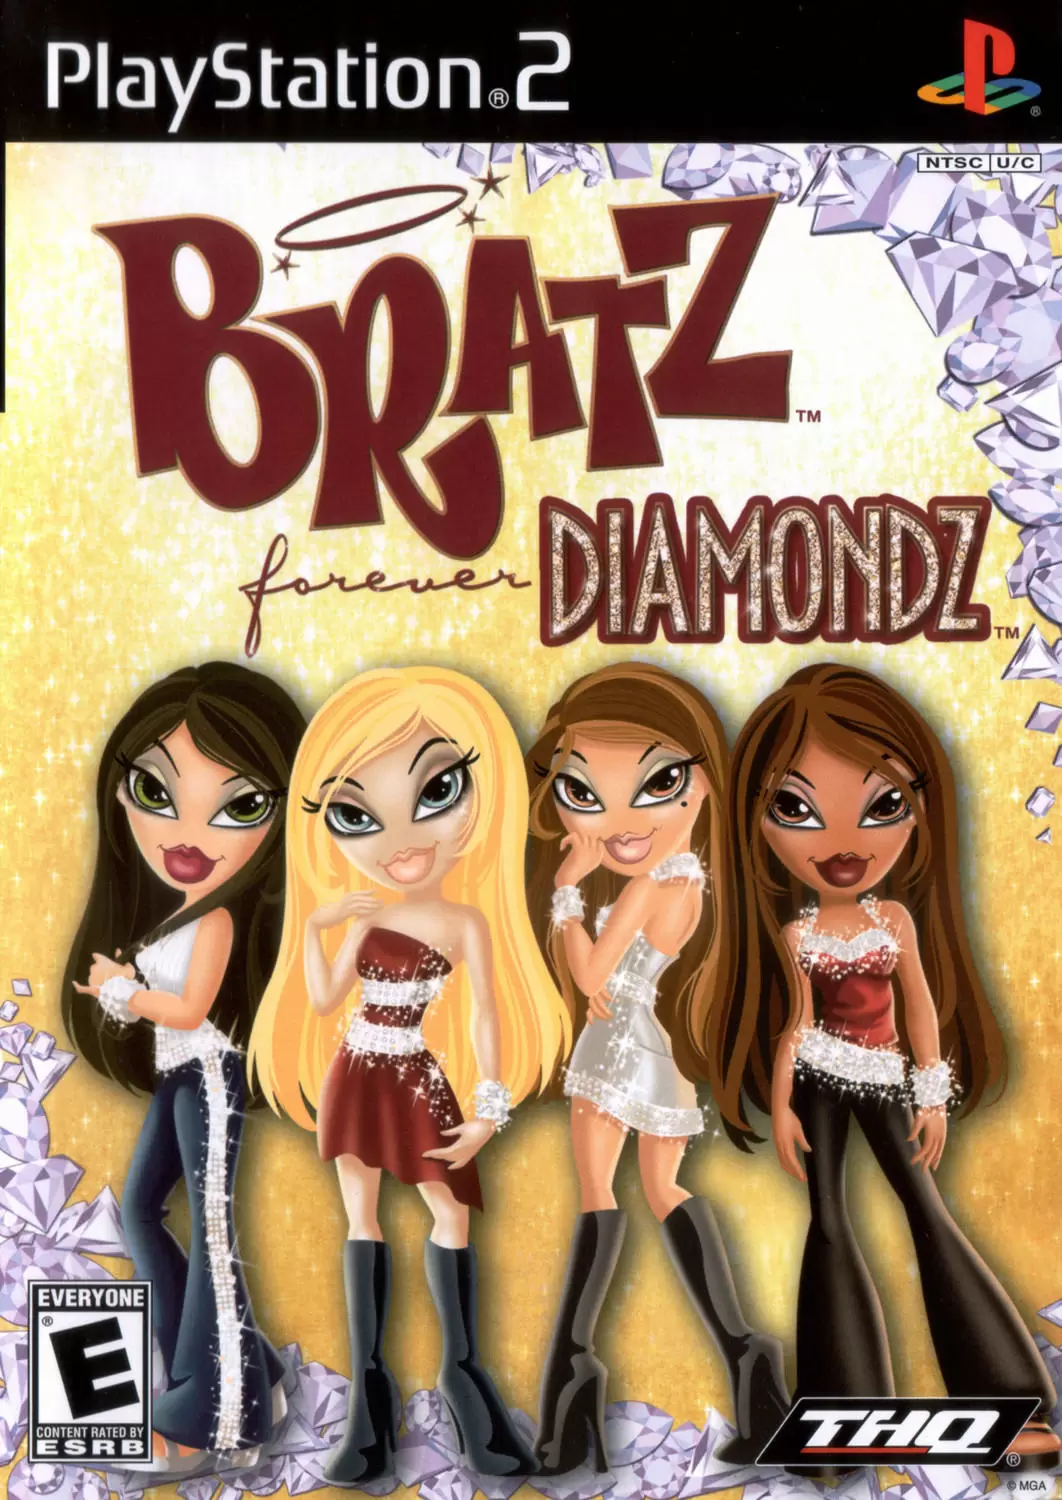 PS2 Games - Bratz: Forever Diamondz